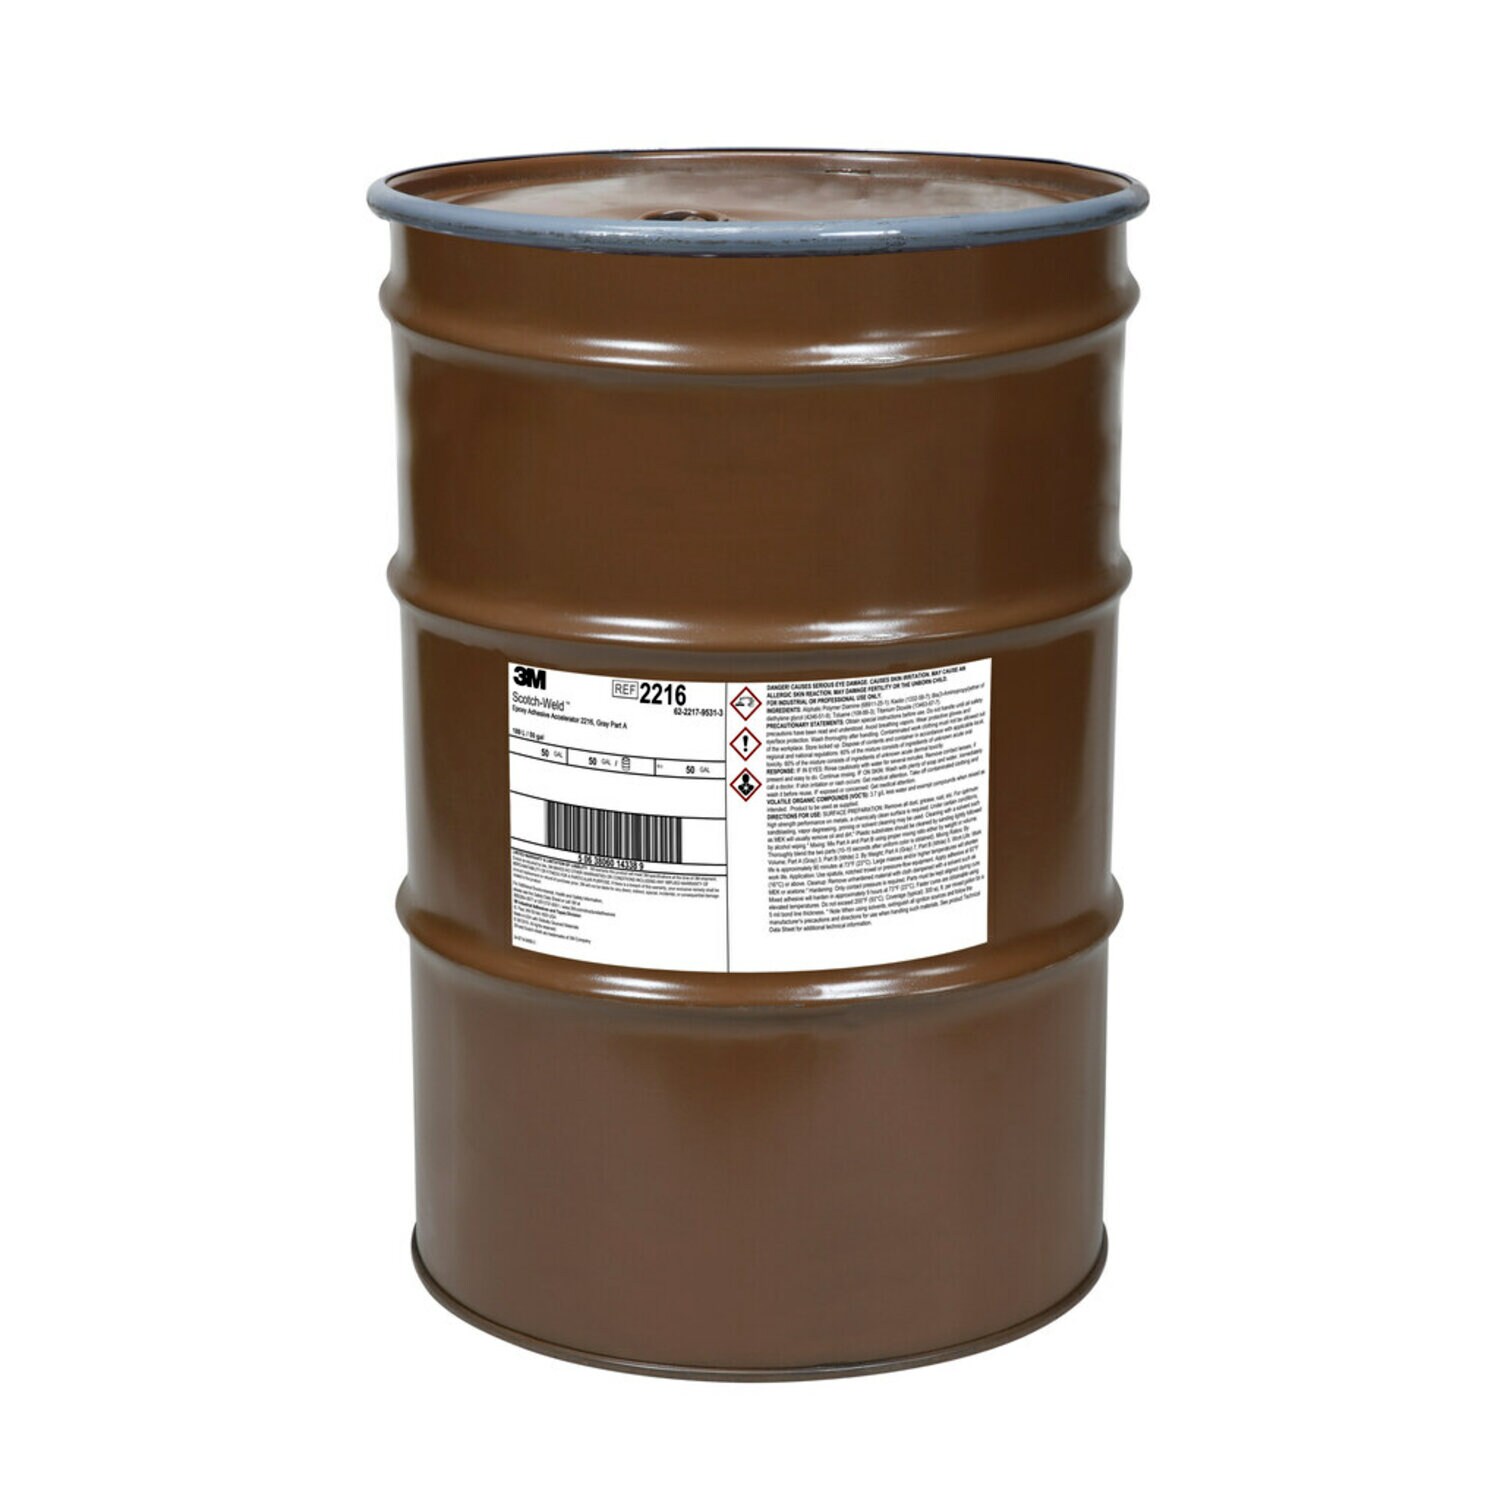 7100166319 - 3M Scotch-Weld Epoxy Adhesive 2216, Gray, Part B, 55 Gallon (50 Gallon
Net), Drum